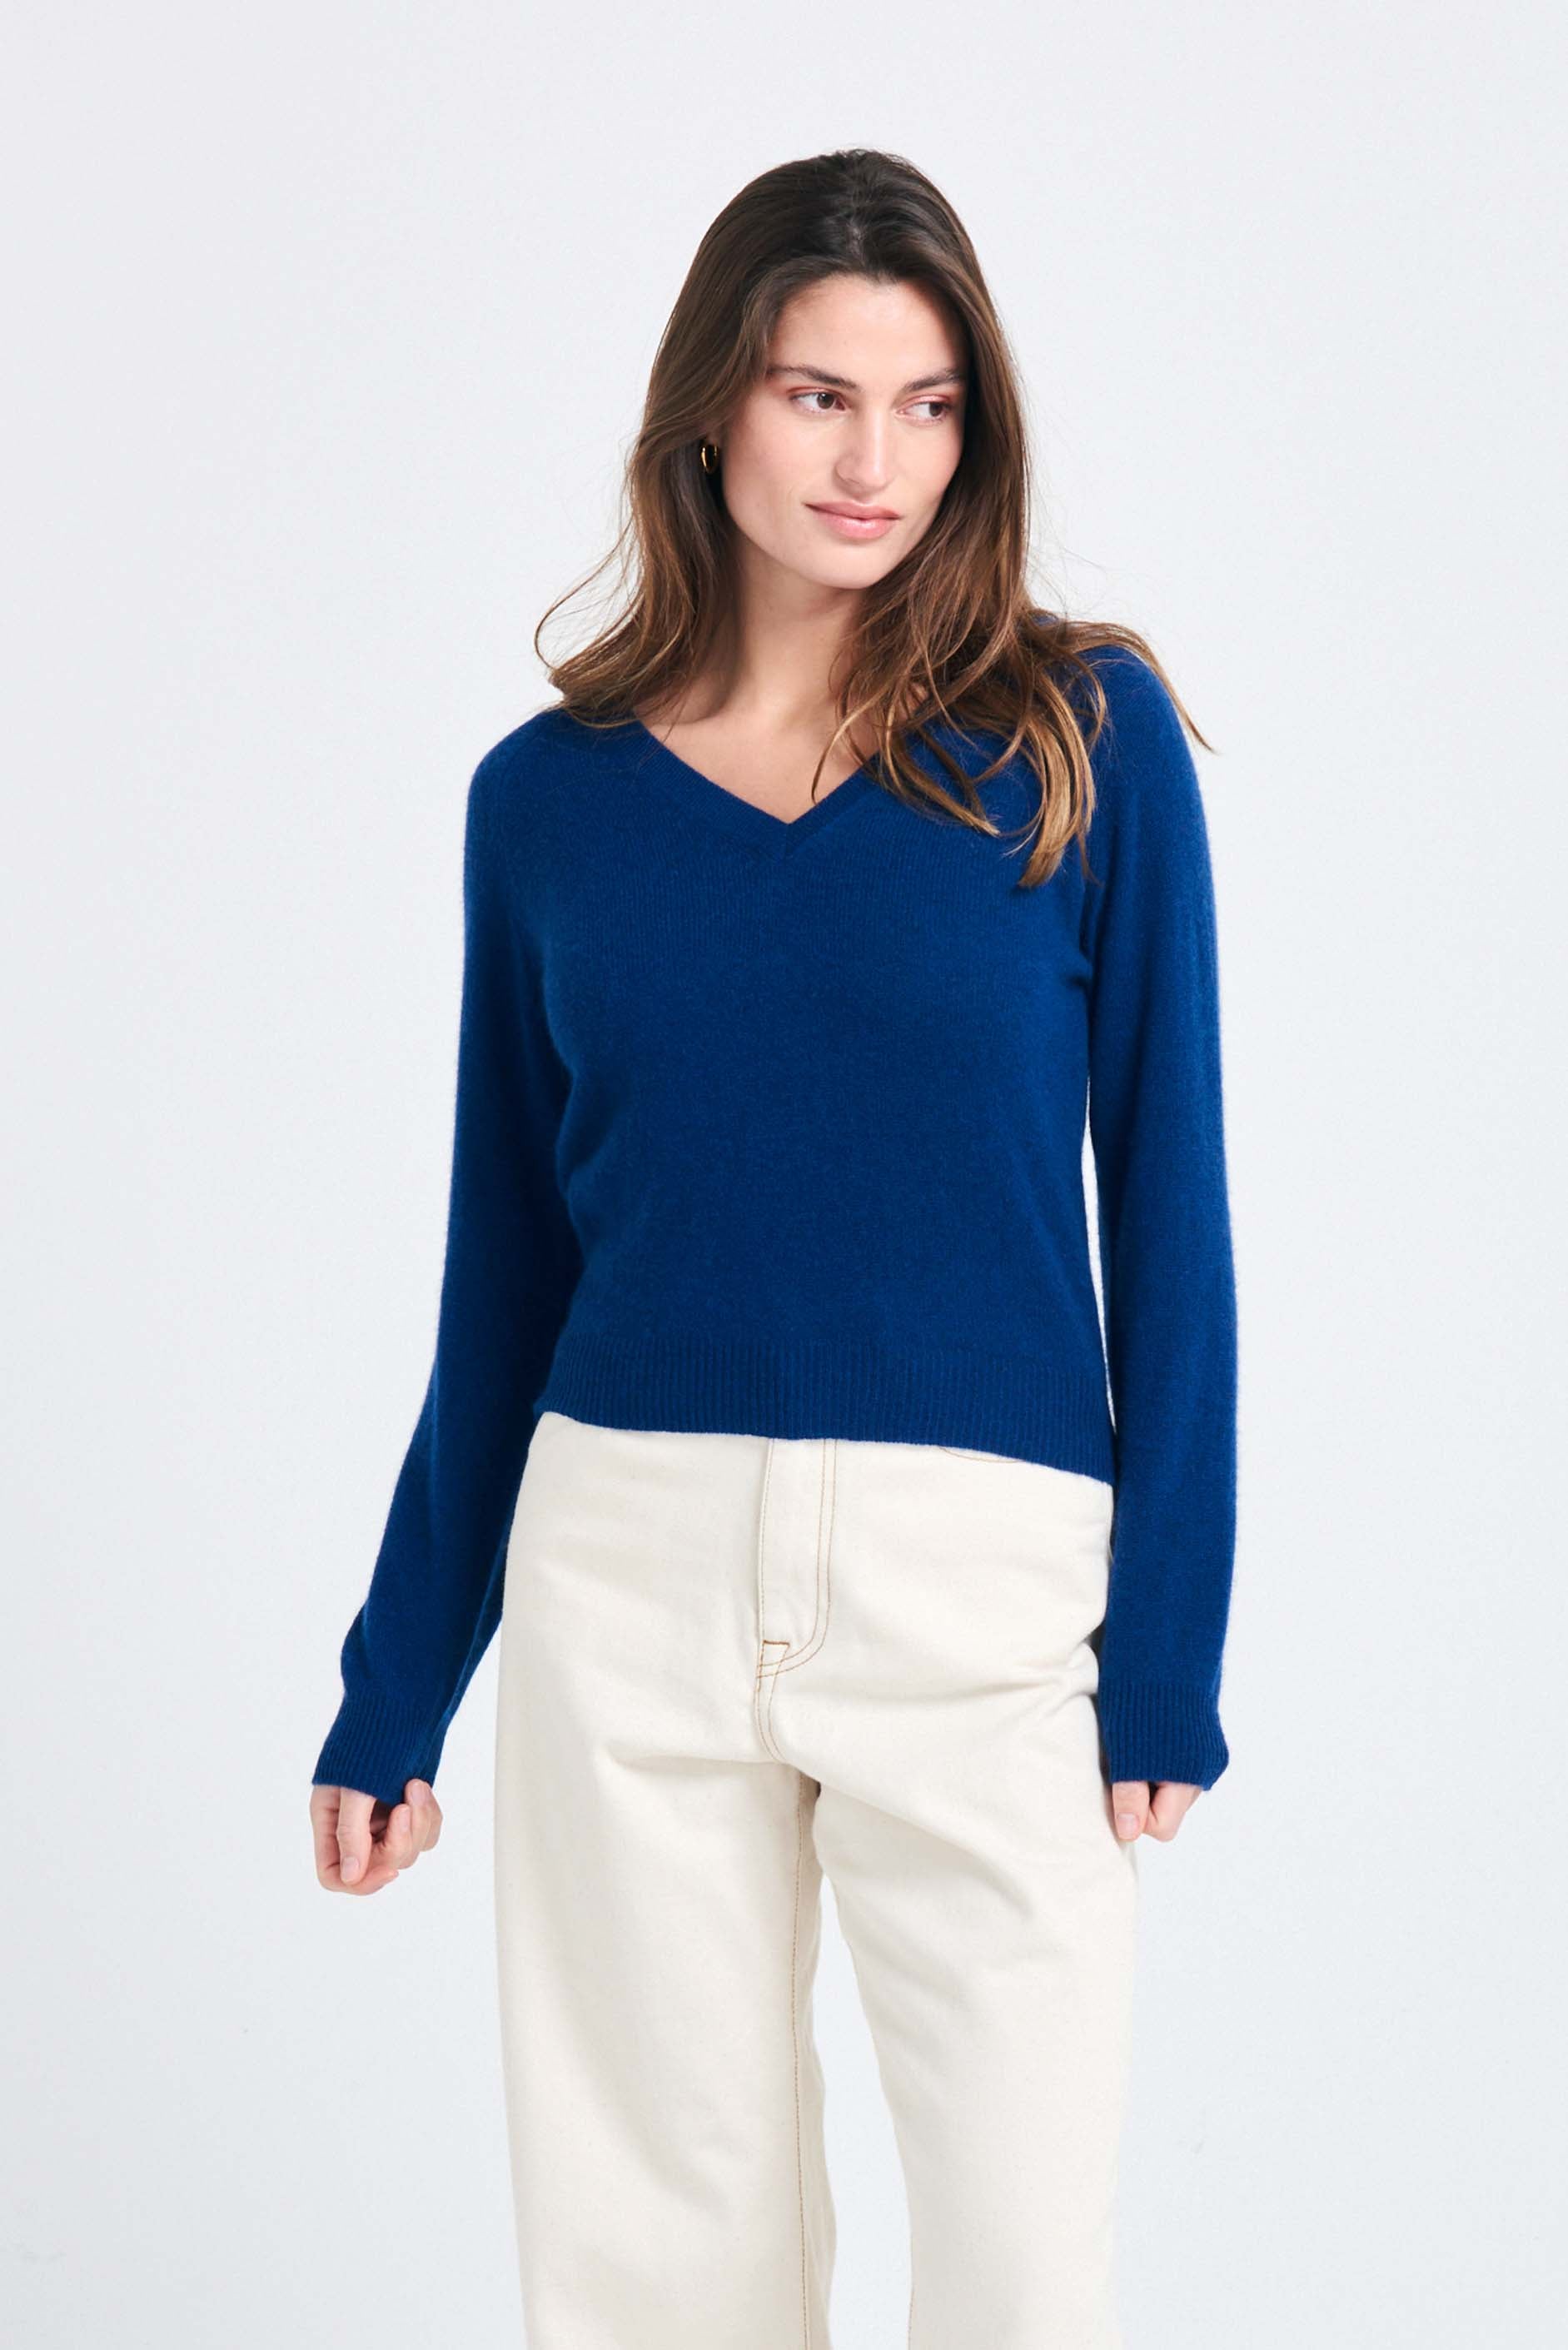 Brown haired female model wearing Jumper1234 Denim blue lighter weight vee neck cashmere jumper